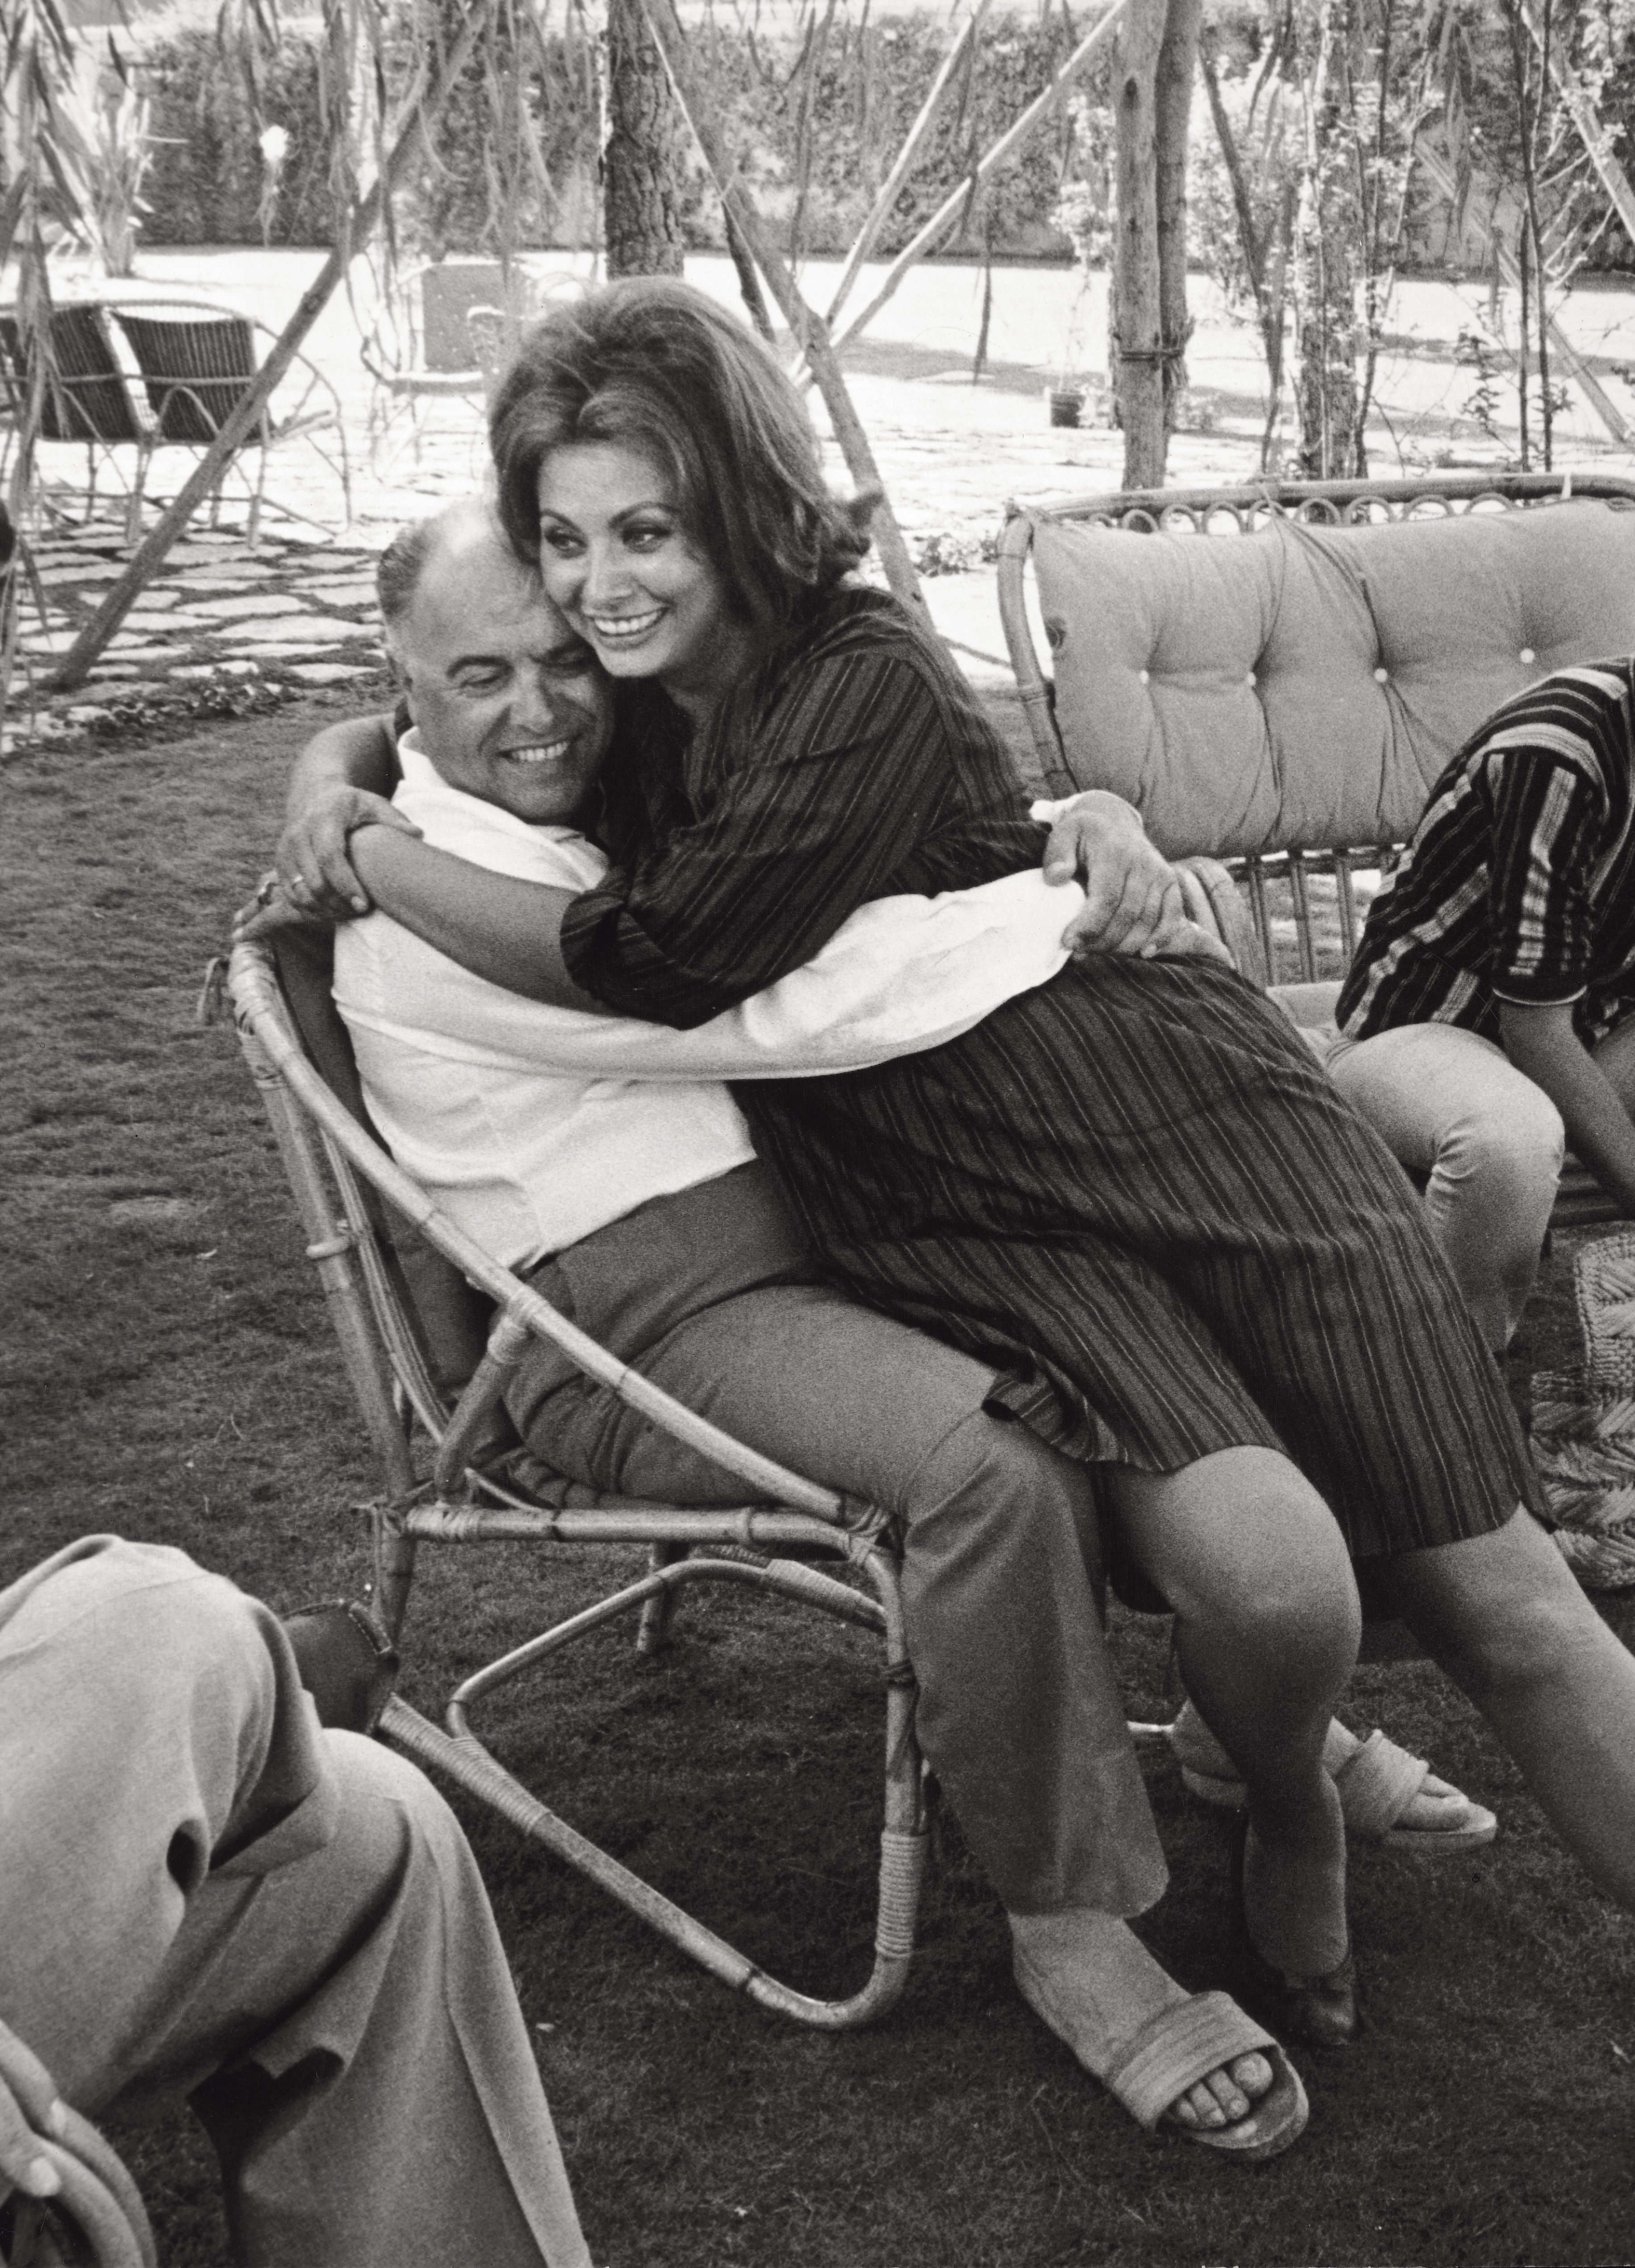 Carlo Ponti Sr. and Sophia Loren embracing in the garden, in 1962. | Source: Pierluigi Praturlon/Reporters Associati & Archivi/Mondadori Portfolio/Getty Images